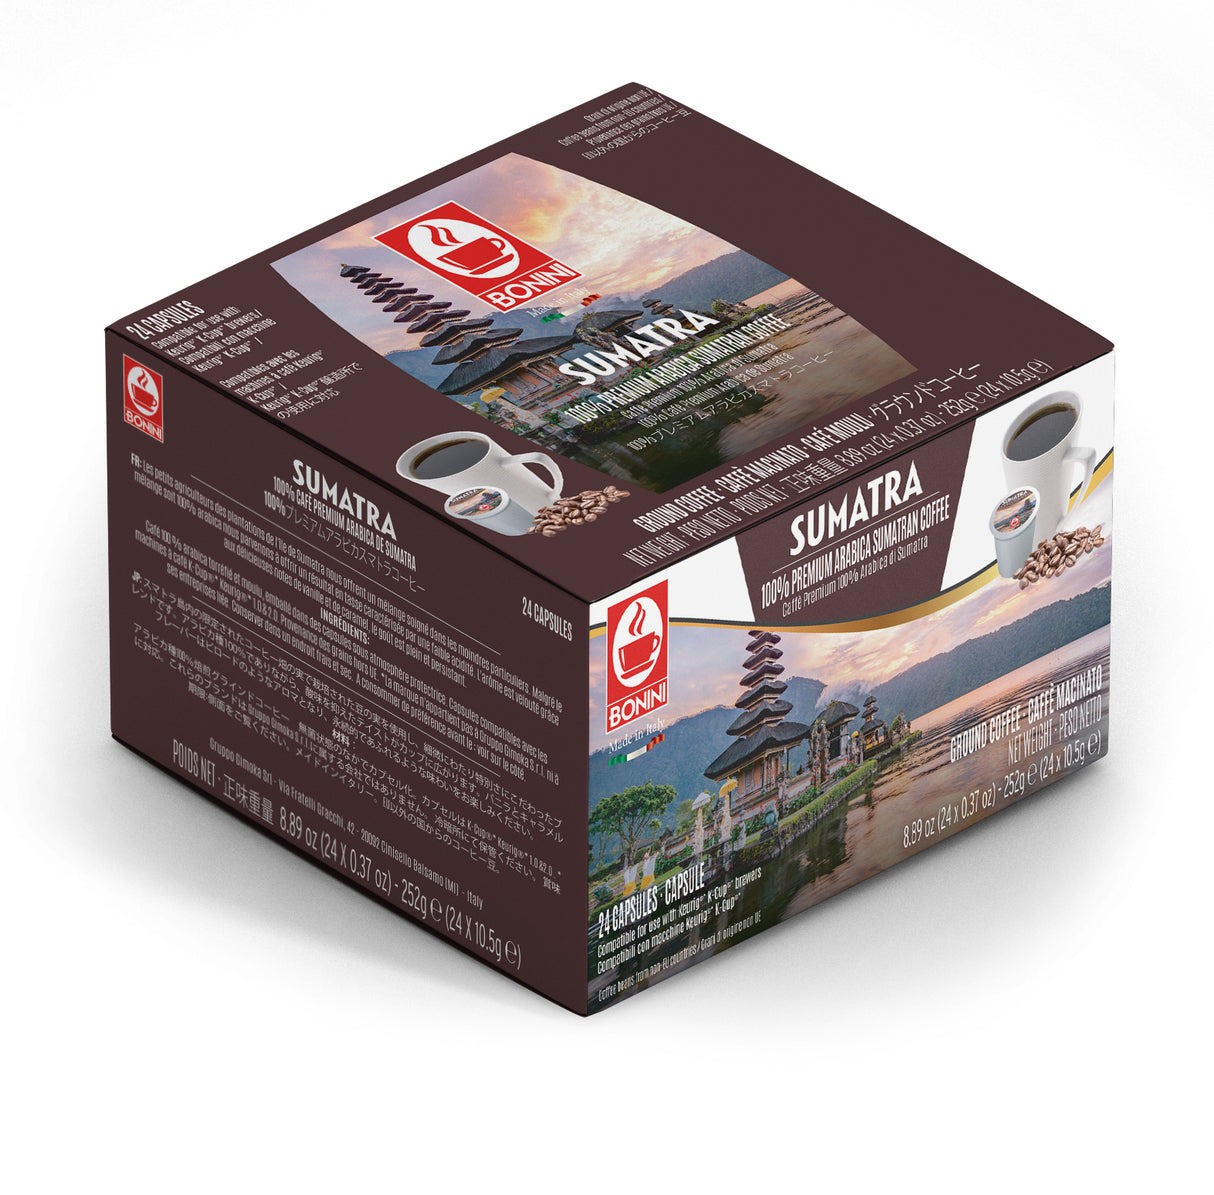 Tiziano Bonini Sumatra Keurig K-Cup Compatible Pods 24 Pack's